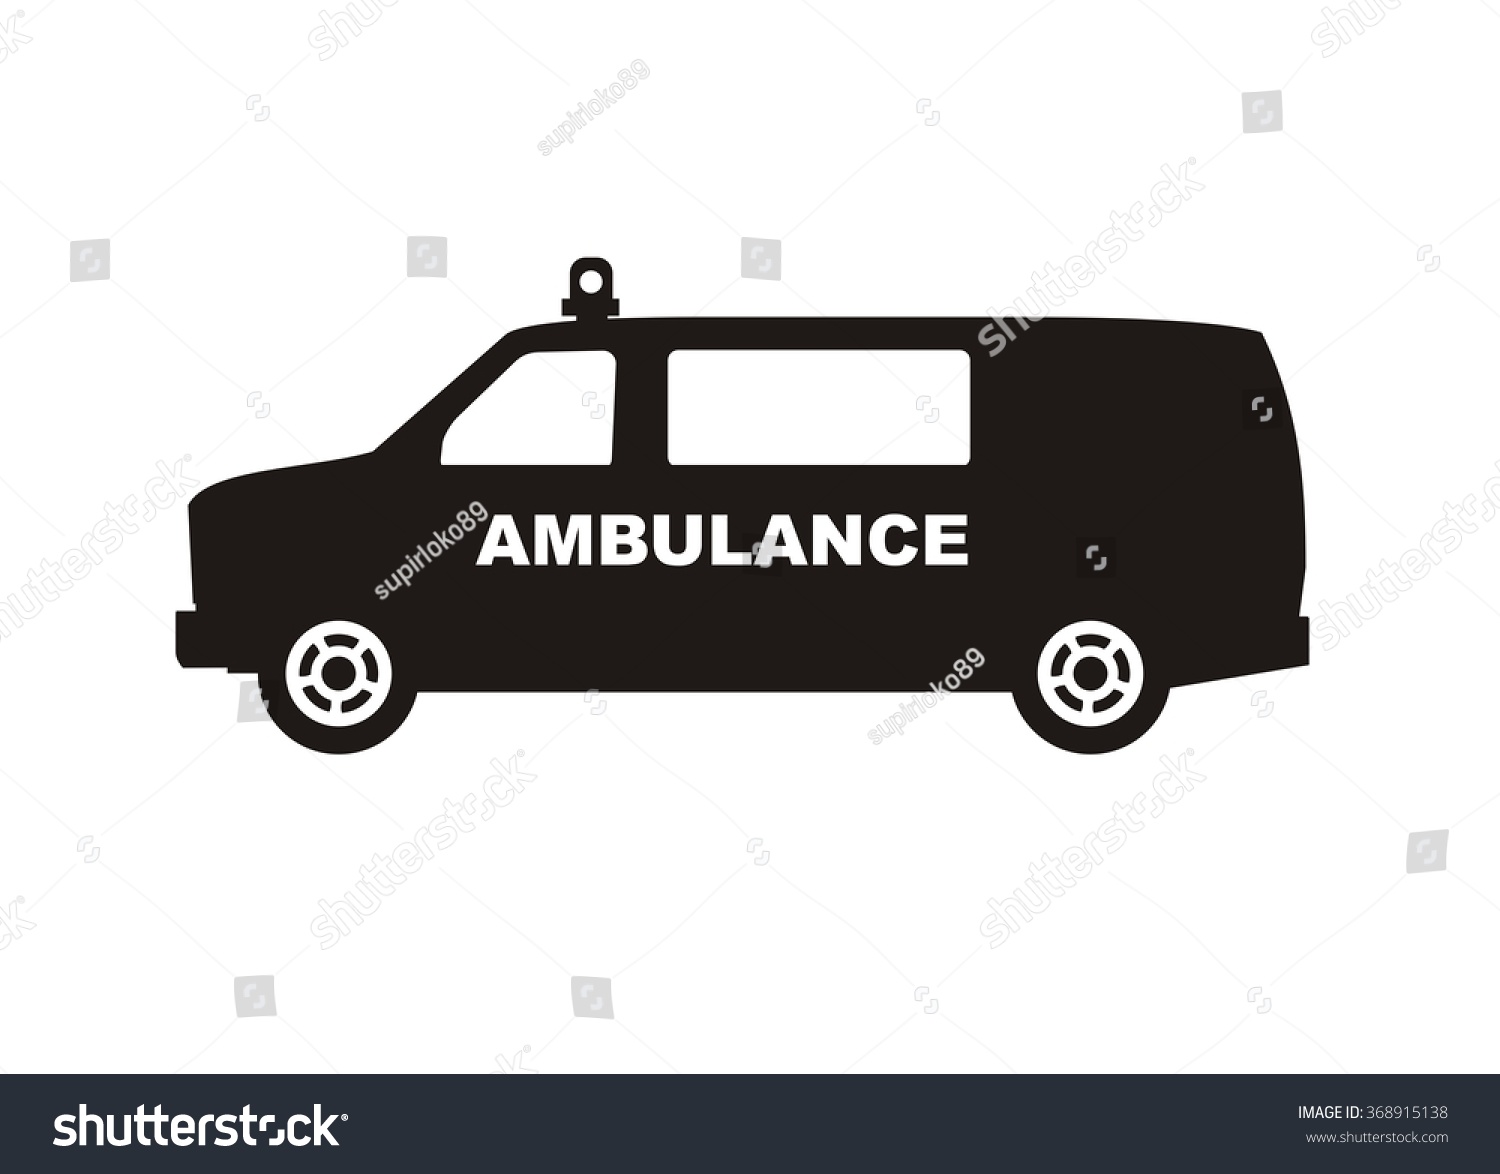 Ambulance Simple Icon Stock Vector 368915138 - Shutterstock